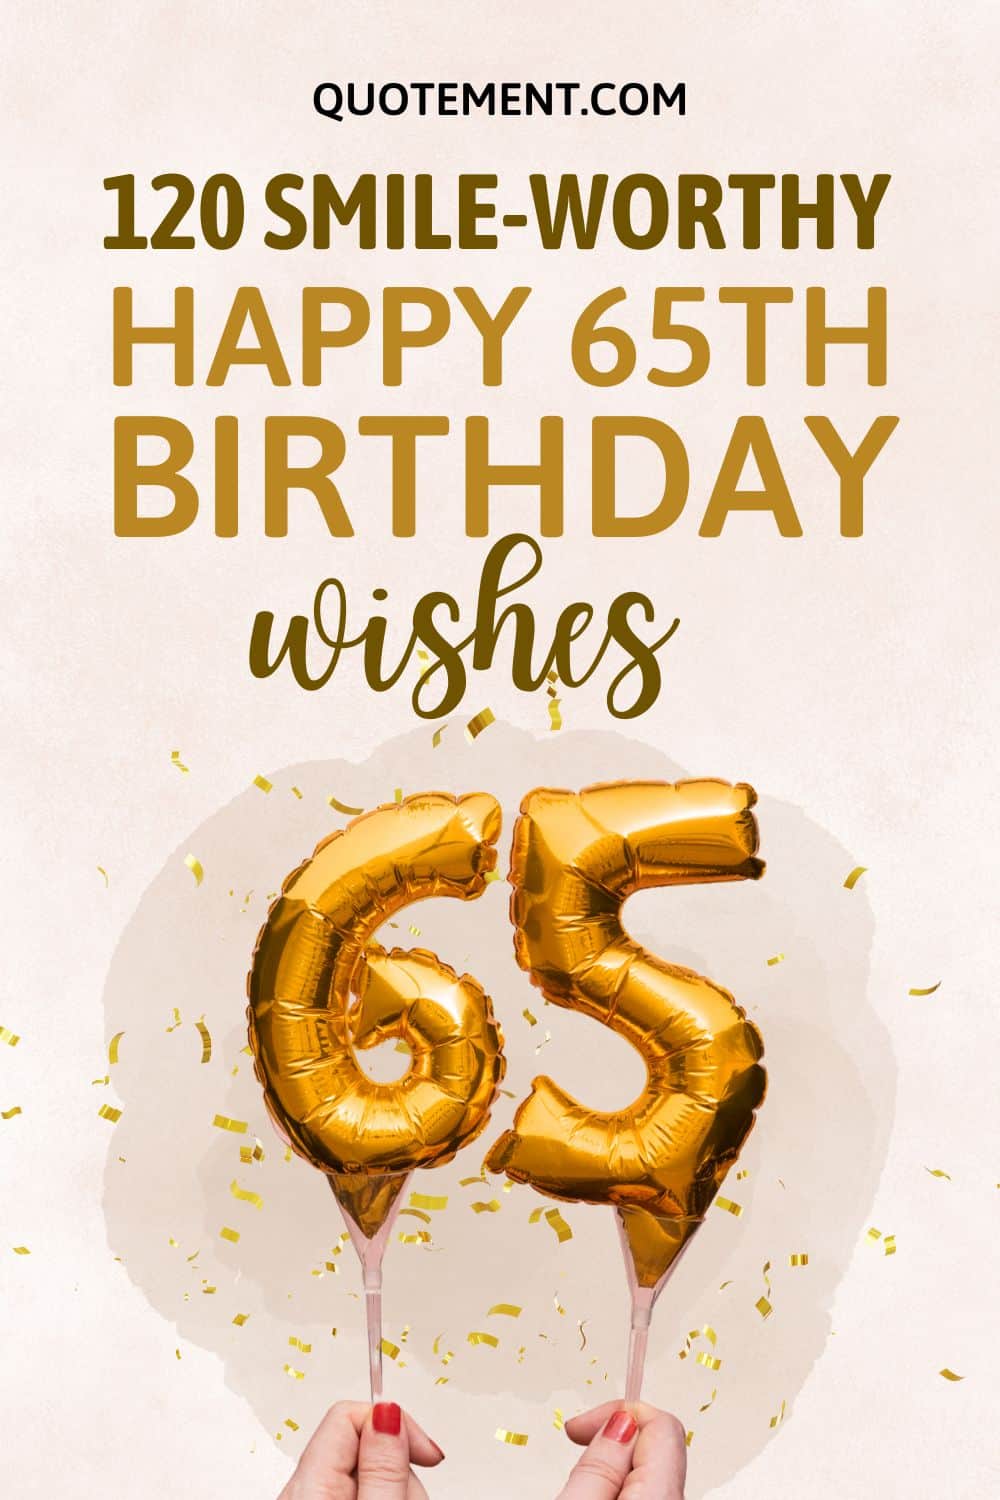 120 Ways To Say Happy 65th Birthday To Friends & Family
